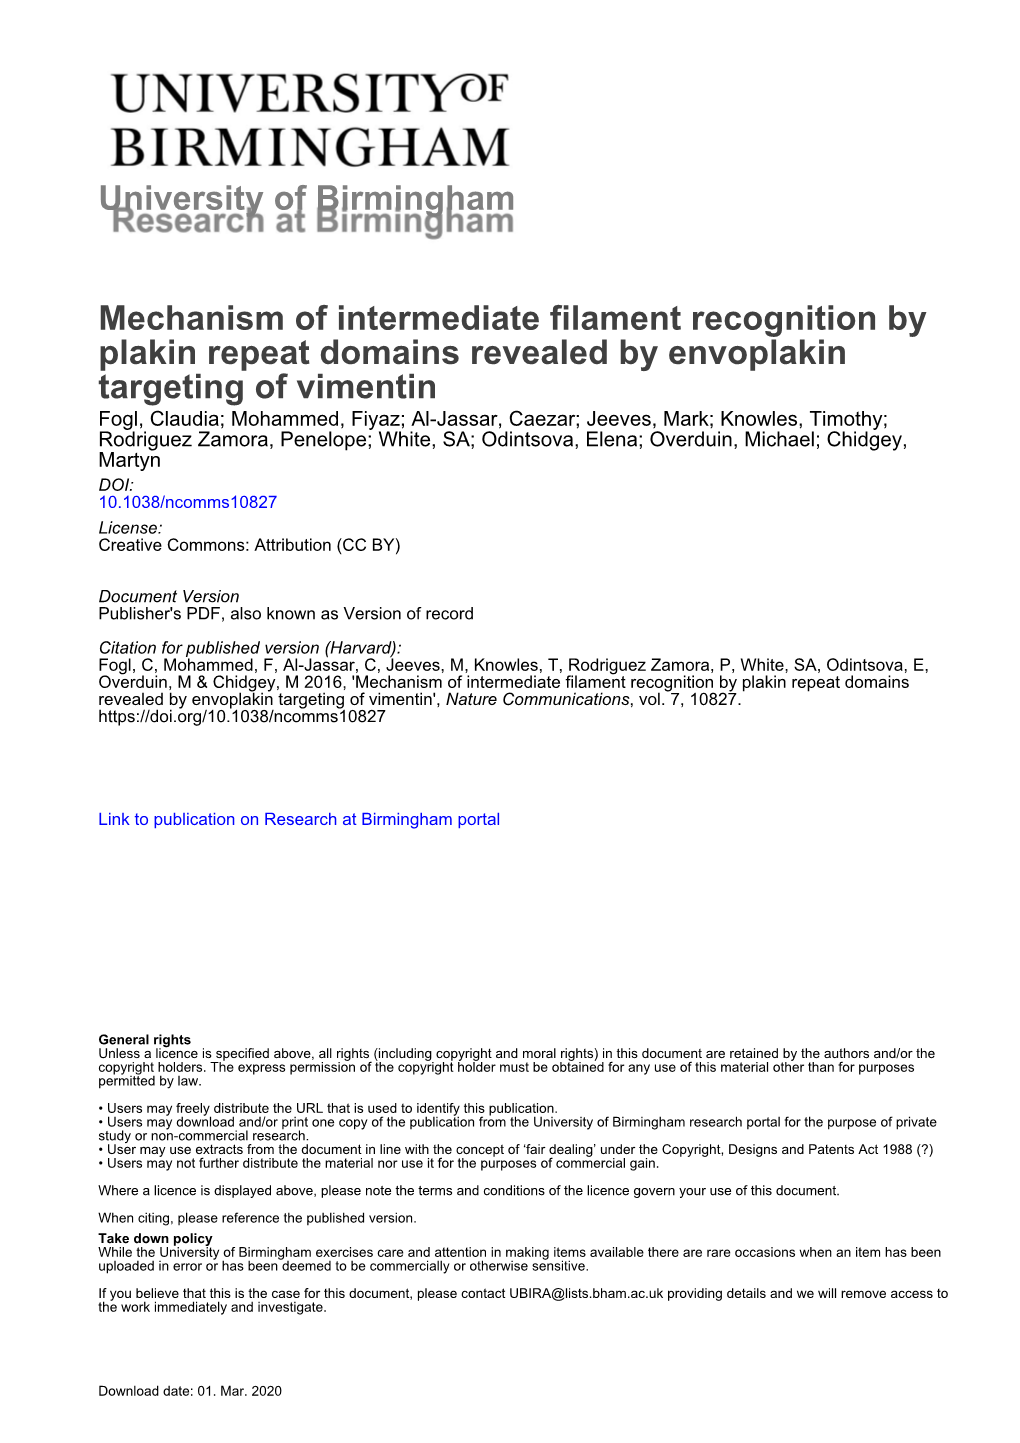 University of Birmingham Mechanism of Intermediate Filament Recognition